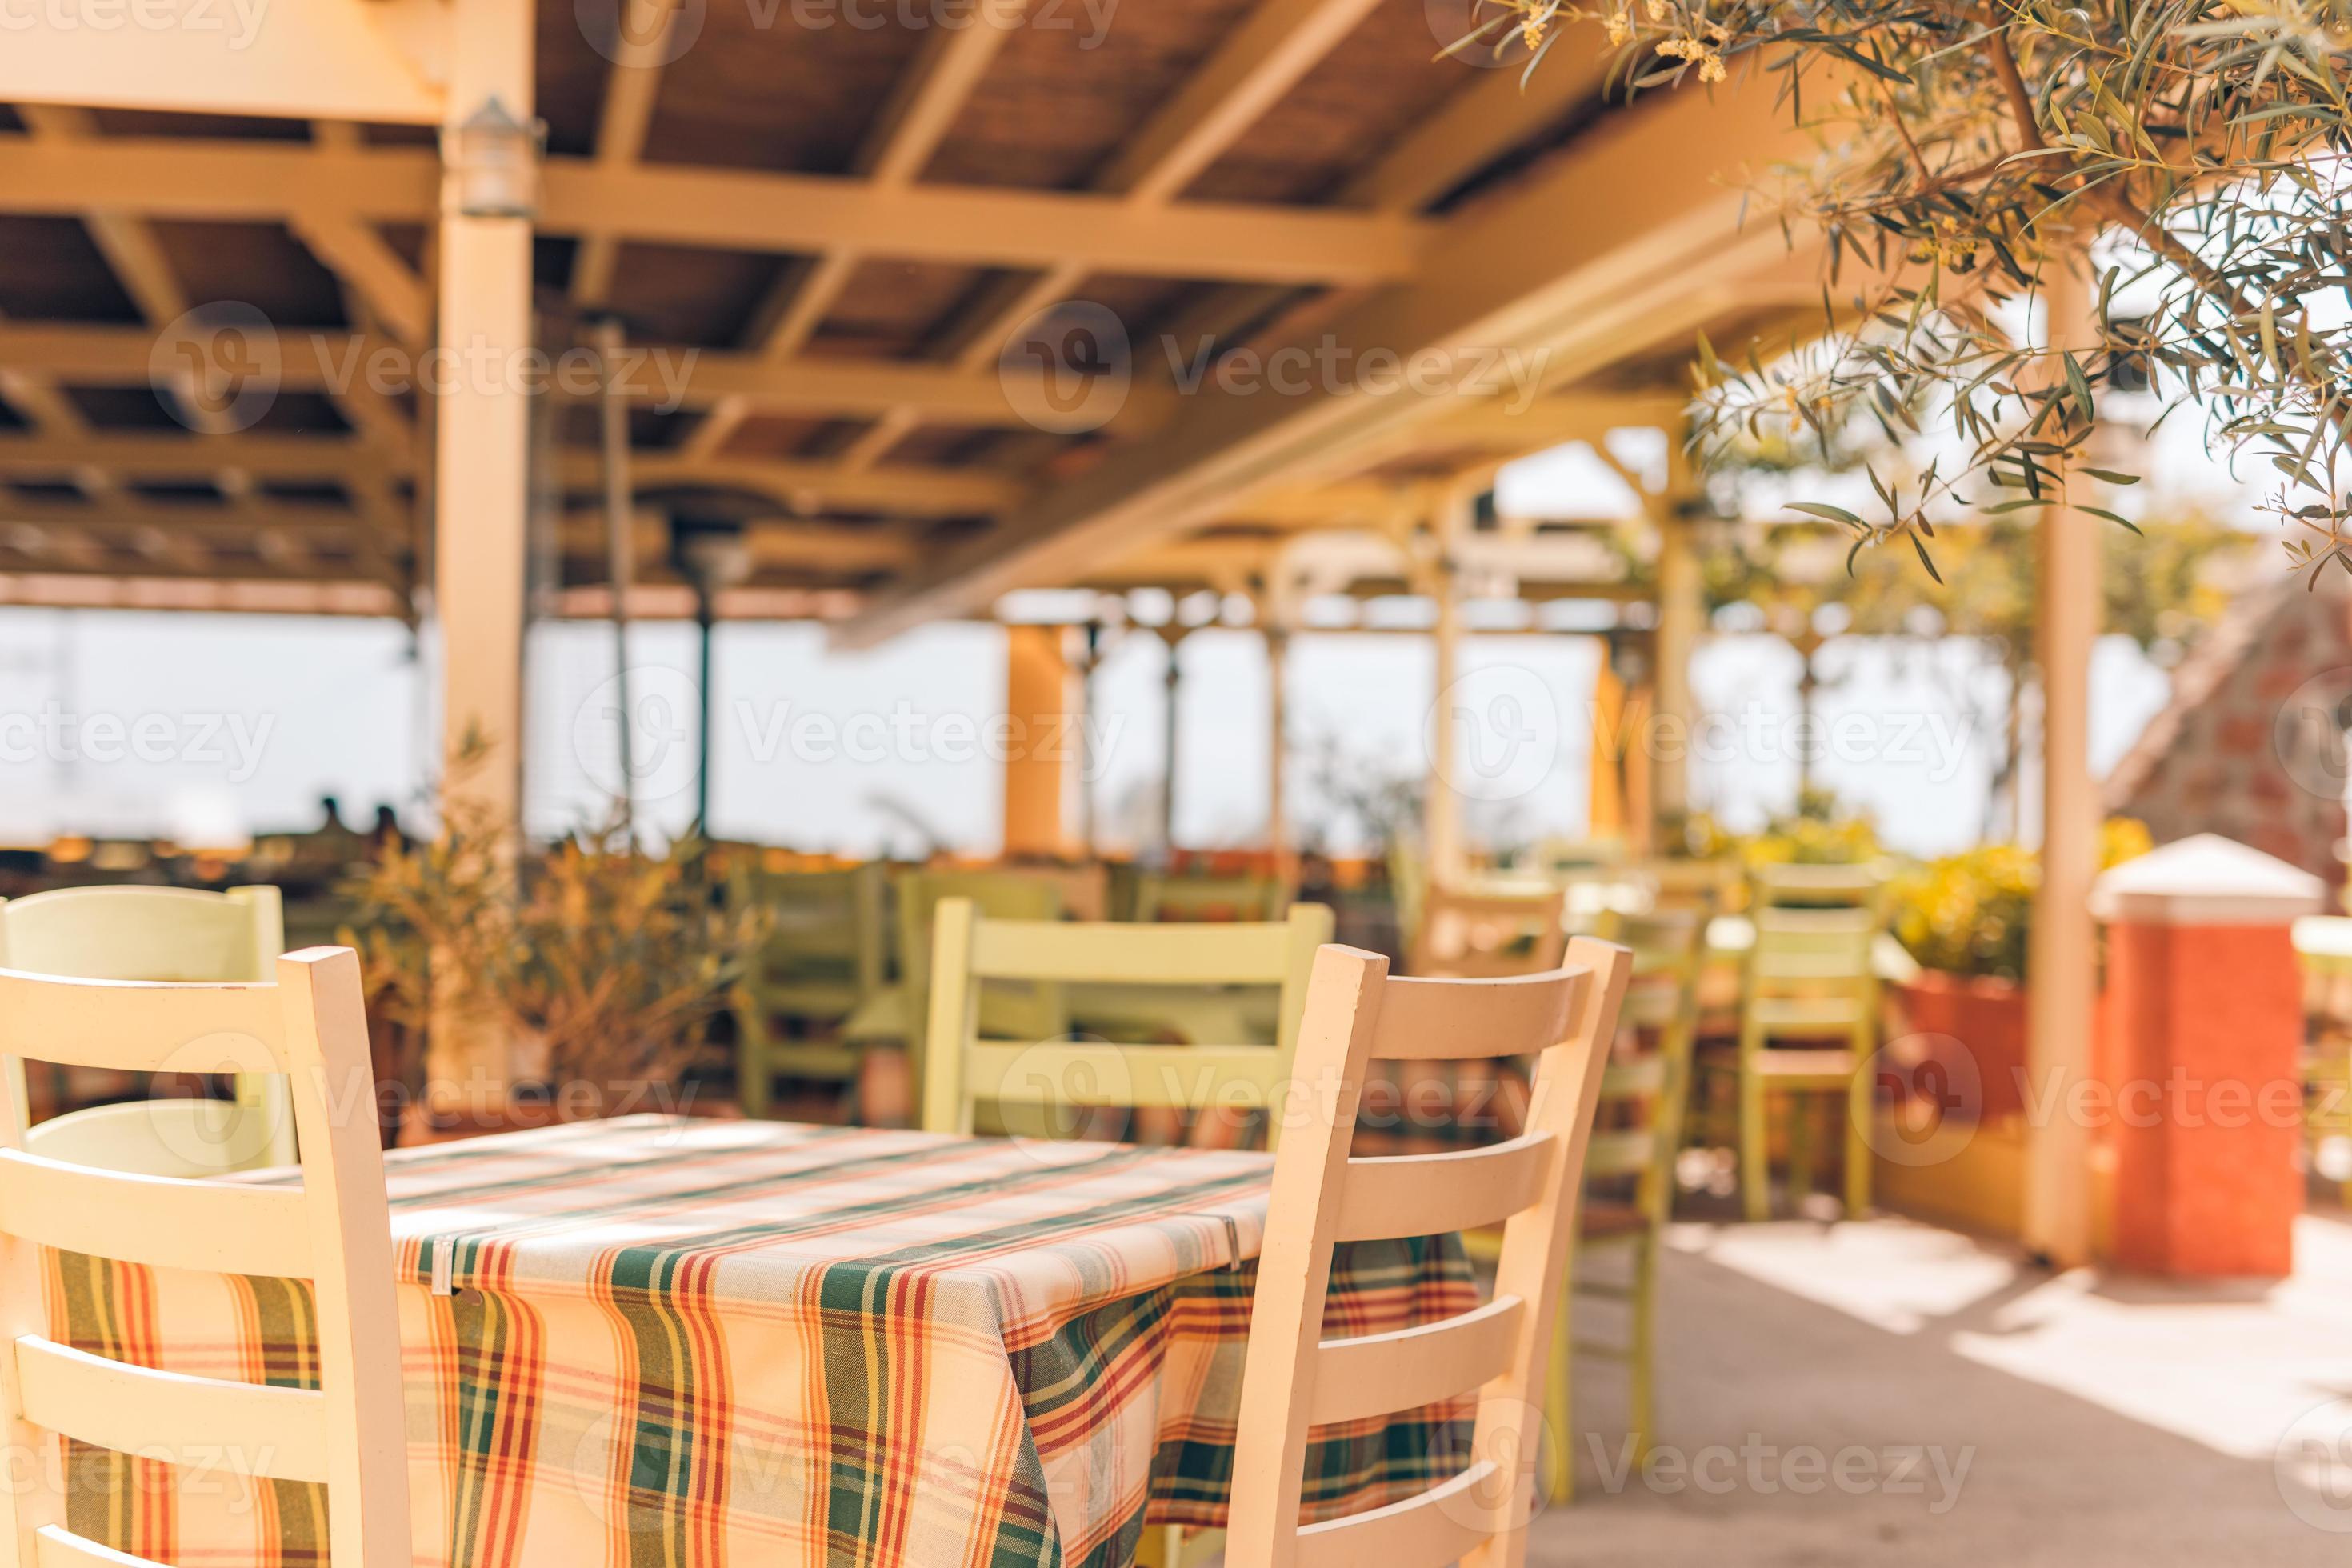 Traditional Greek Outdoor Restaurant With Mediterranean Sea View